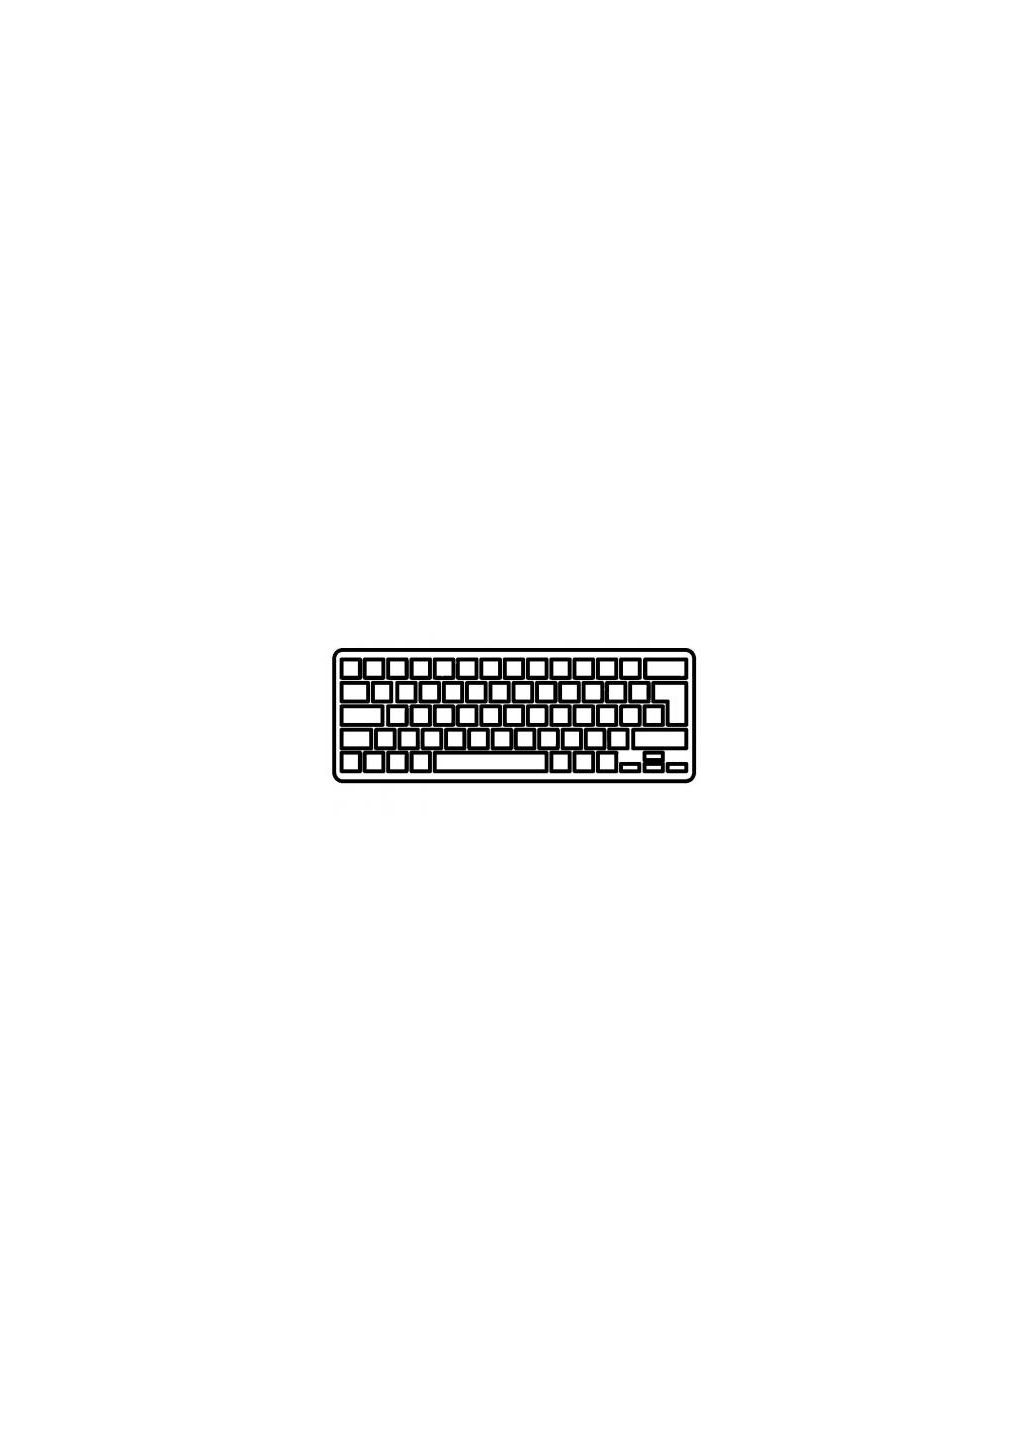 Клавиатура ноутбука Aspire S7391 Series серебро без рамки (с широким шлейфом) R (A43759) Acer aspire s7-391 series серебро без рамки (с широким (276707573)